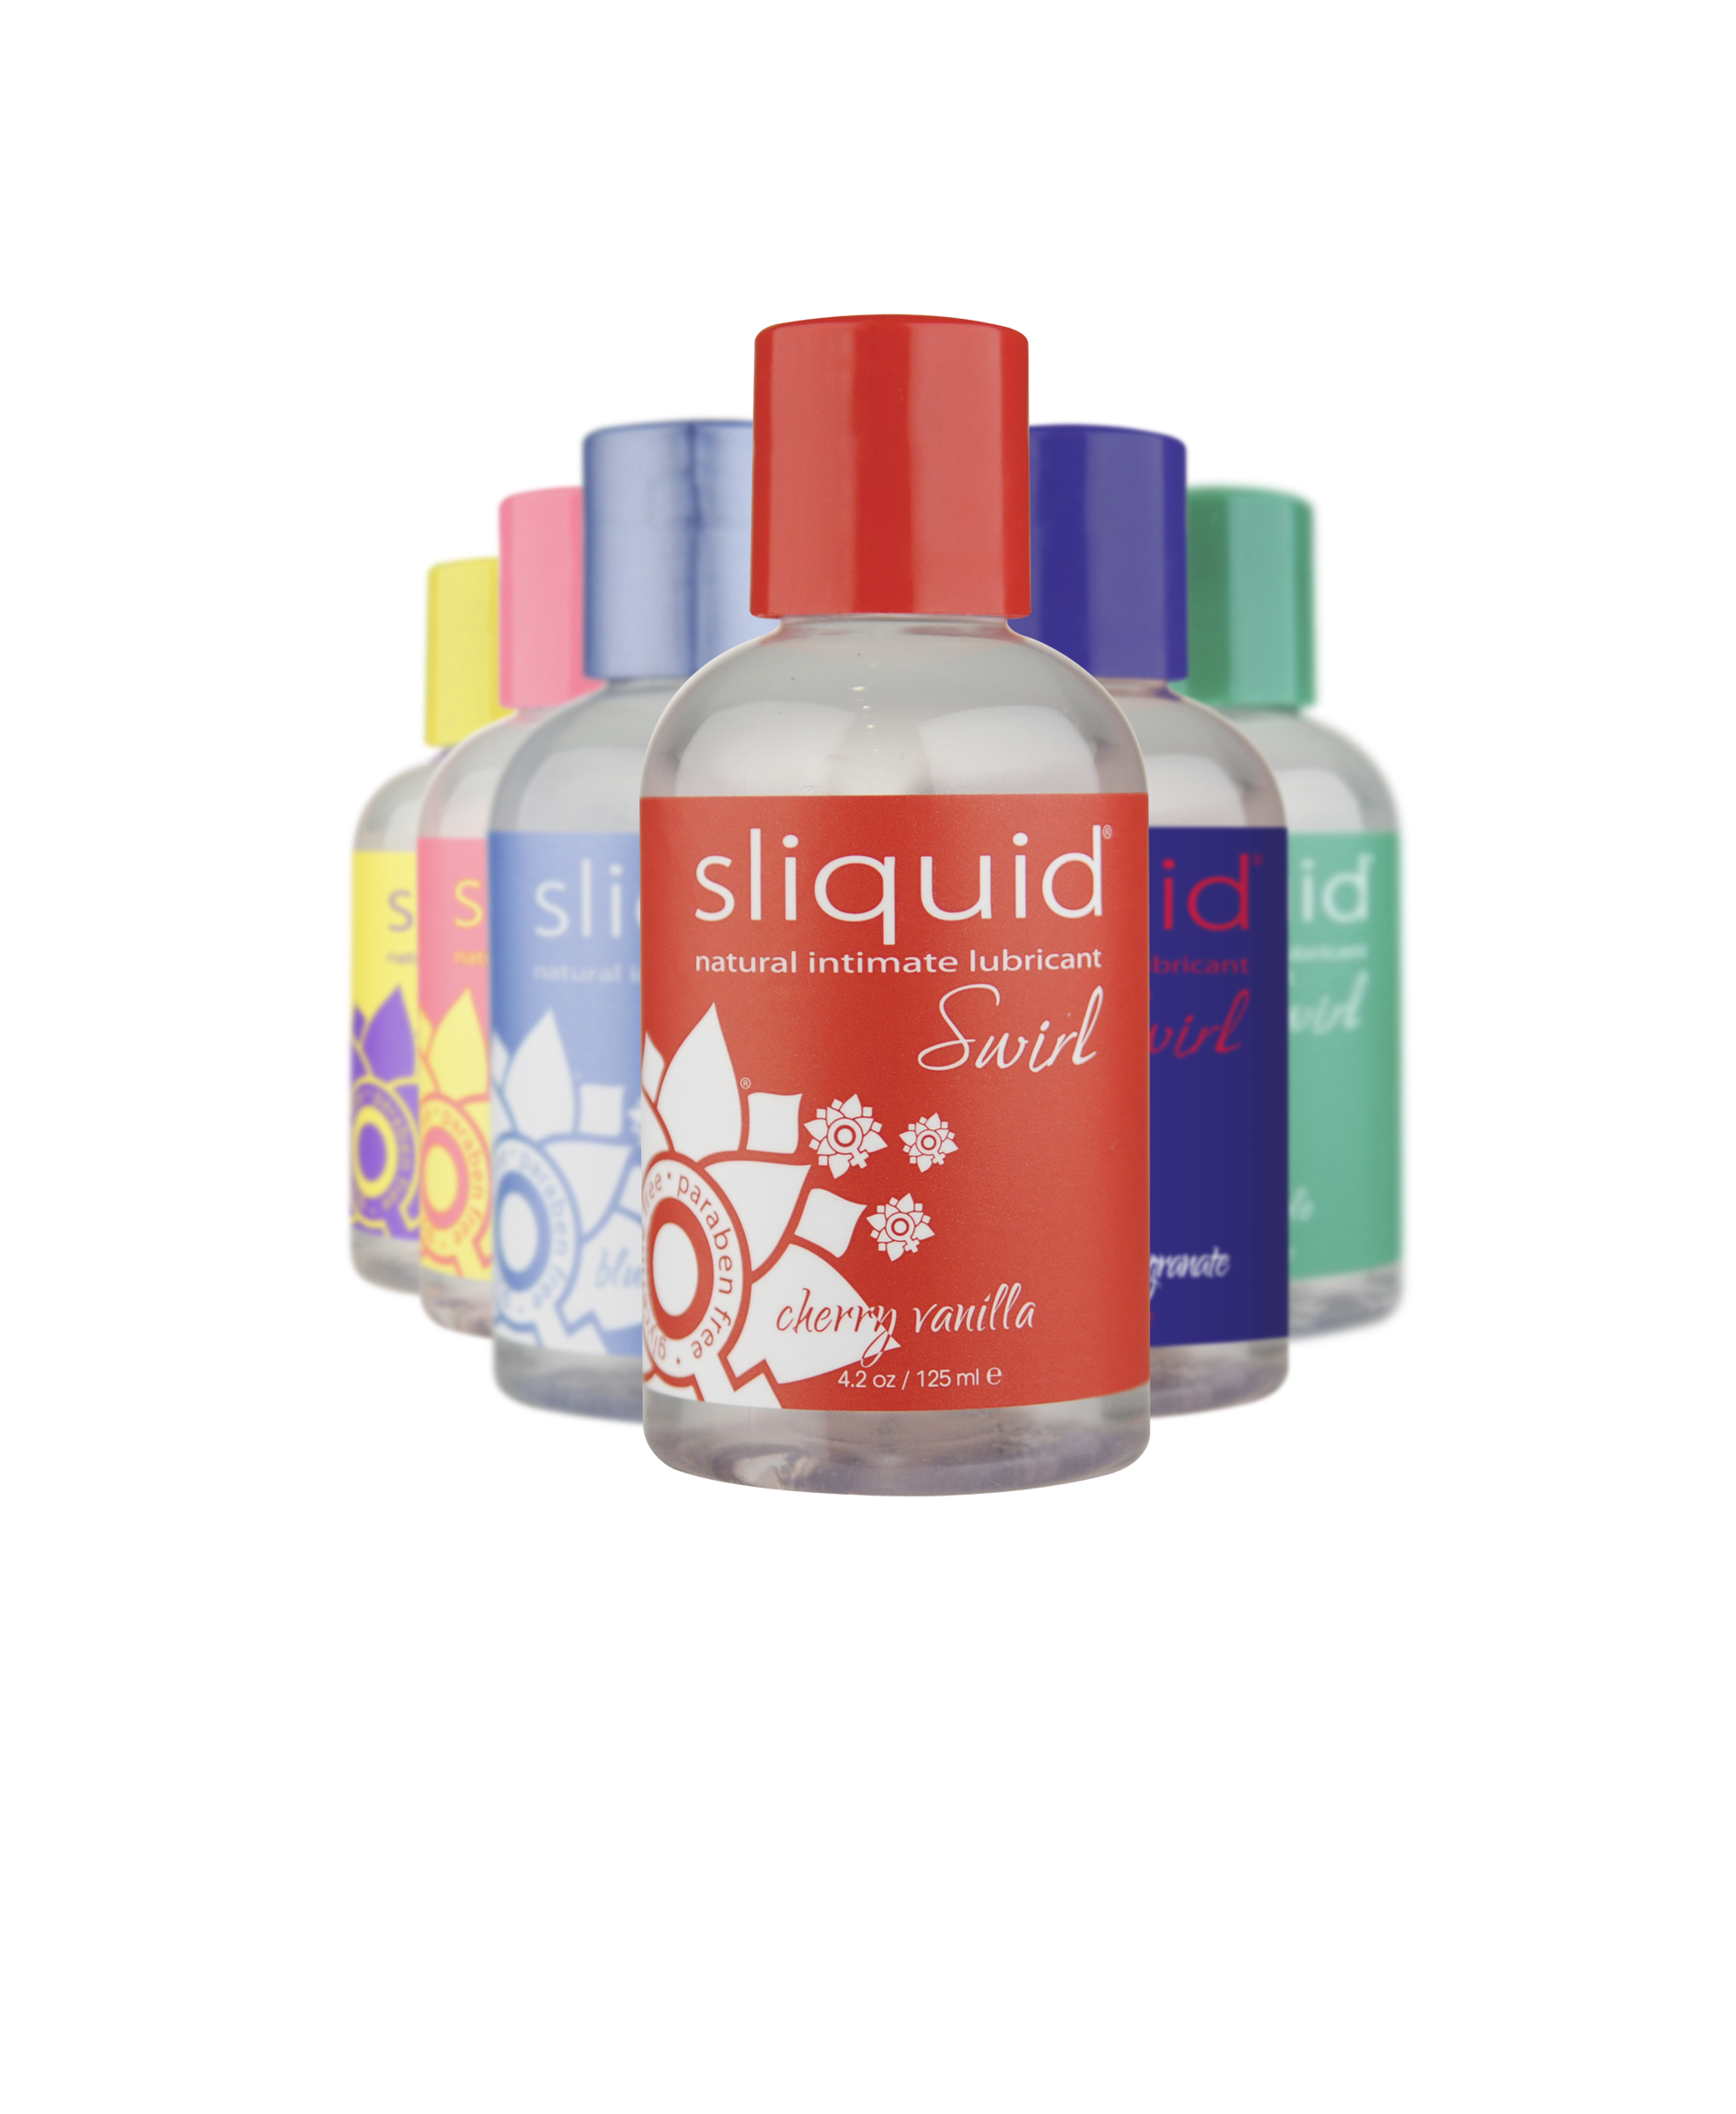 Sliquid - Naturals Swirl - Blackberry Fig - 125ml